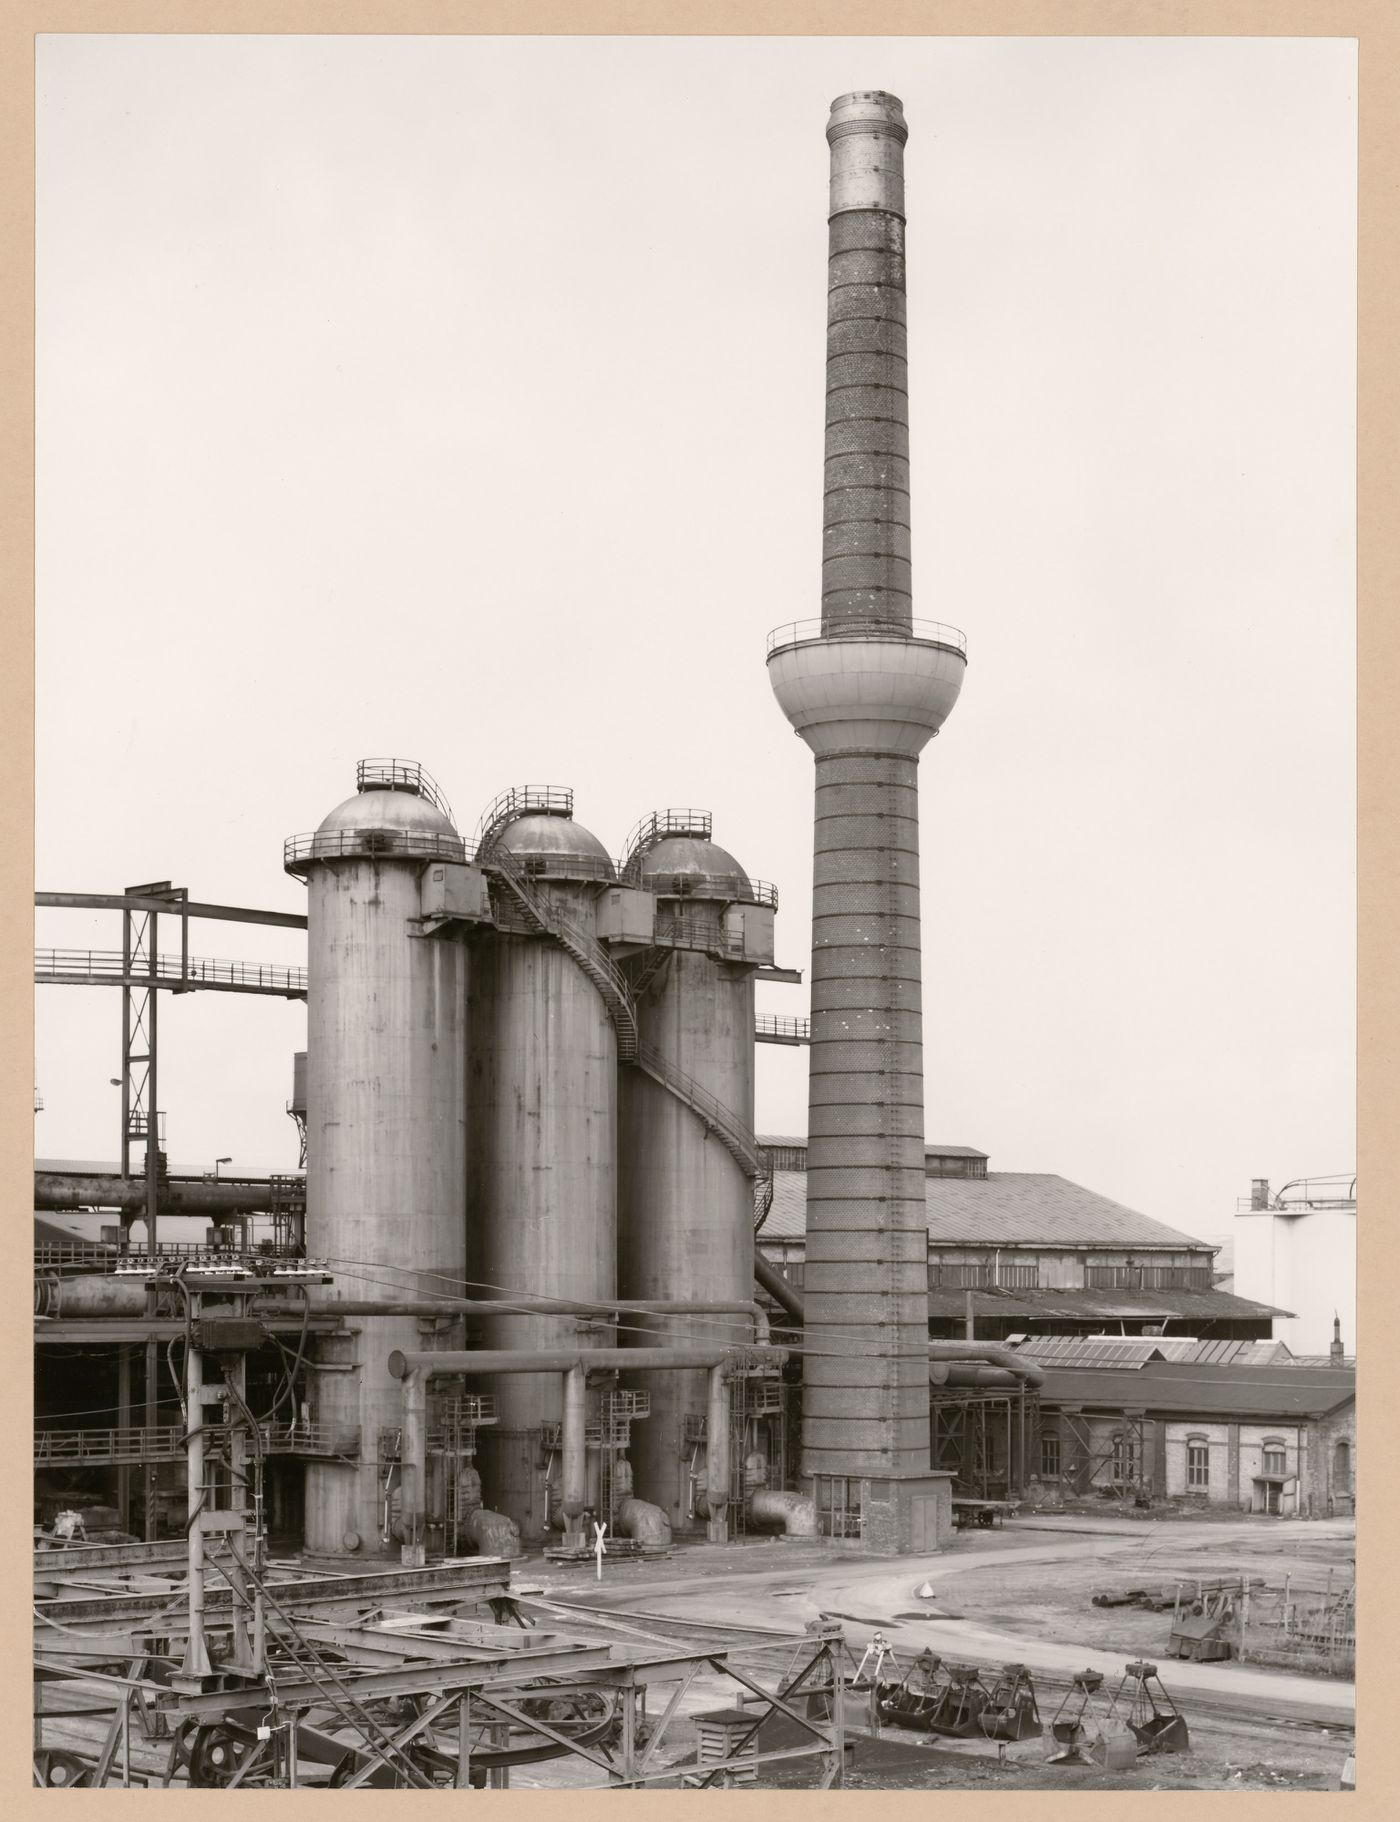 View of Metallhüttenwerk industrial plant showing hot blast stoves and a chimney, Lübeck-Herrenwyk, Germany